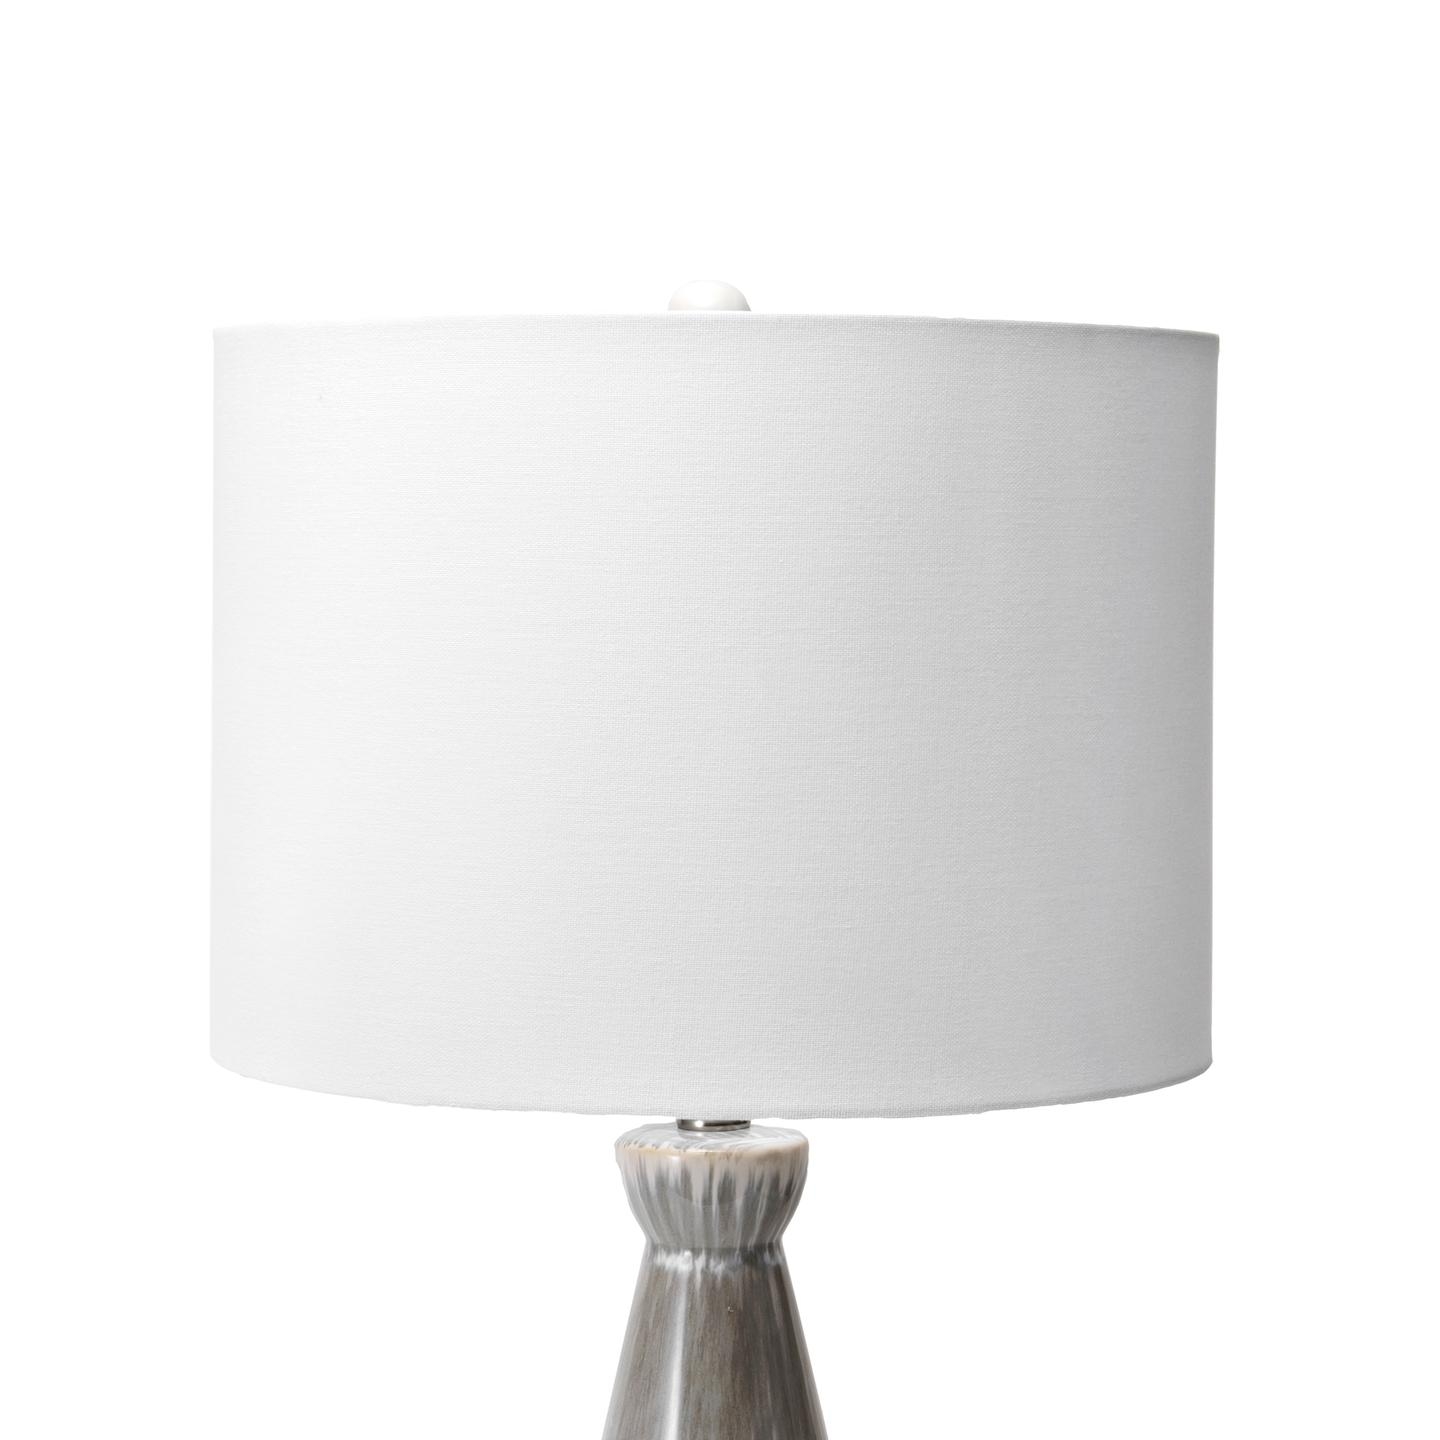 Carmel 27" Ceramic Table Lamp - Image 3